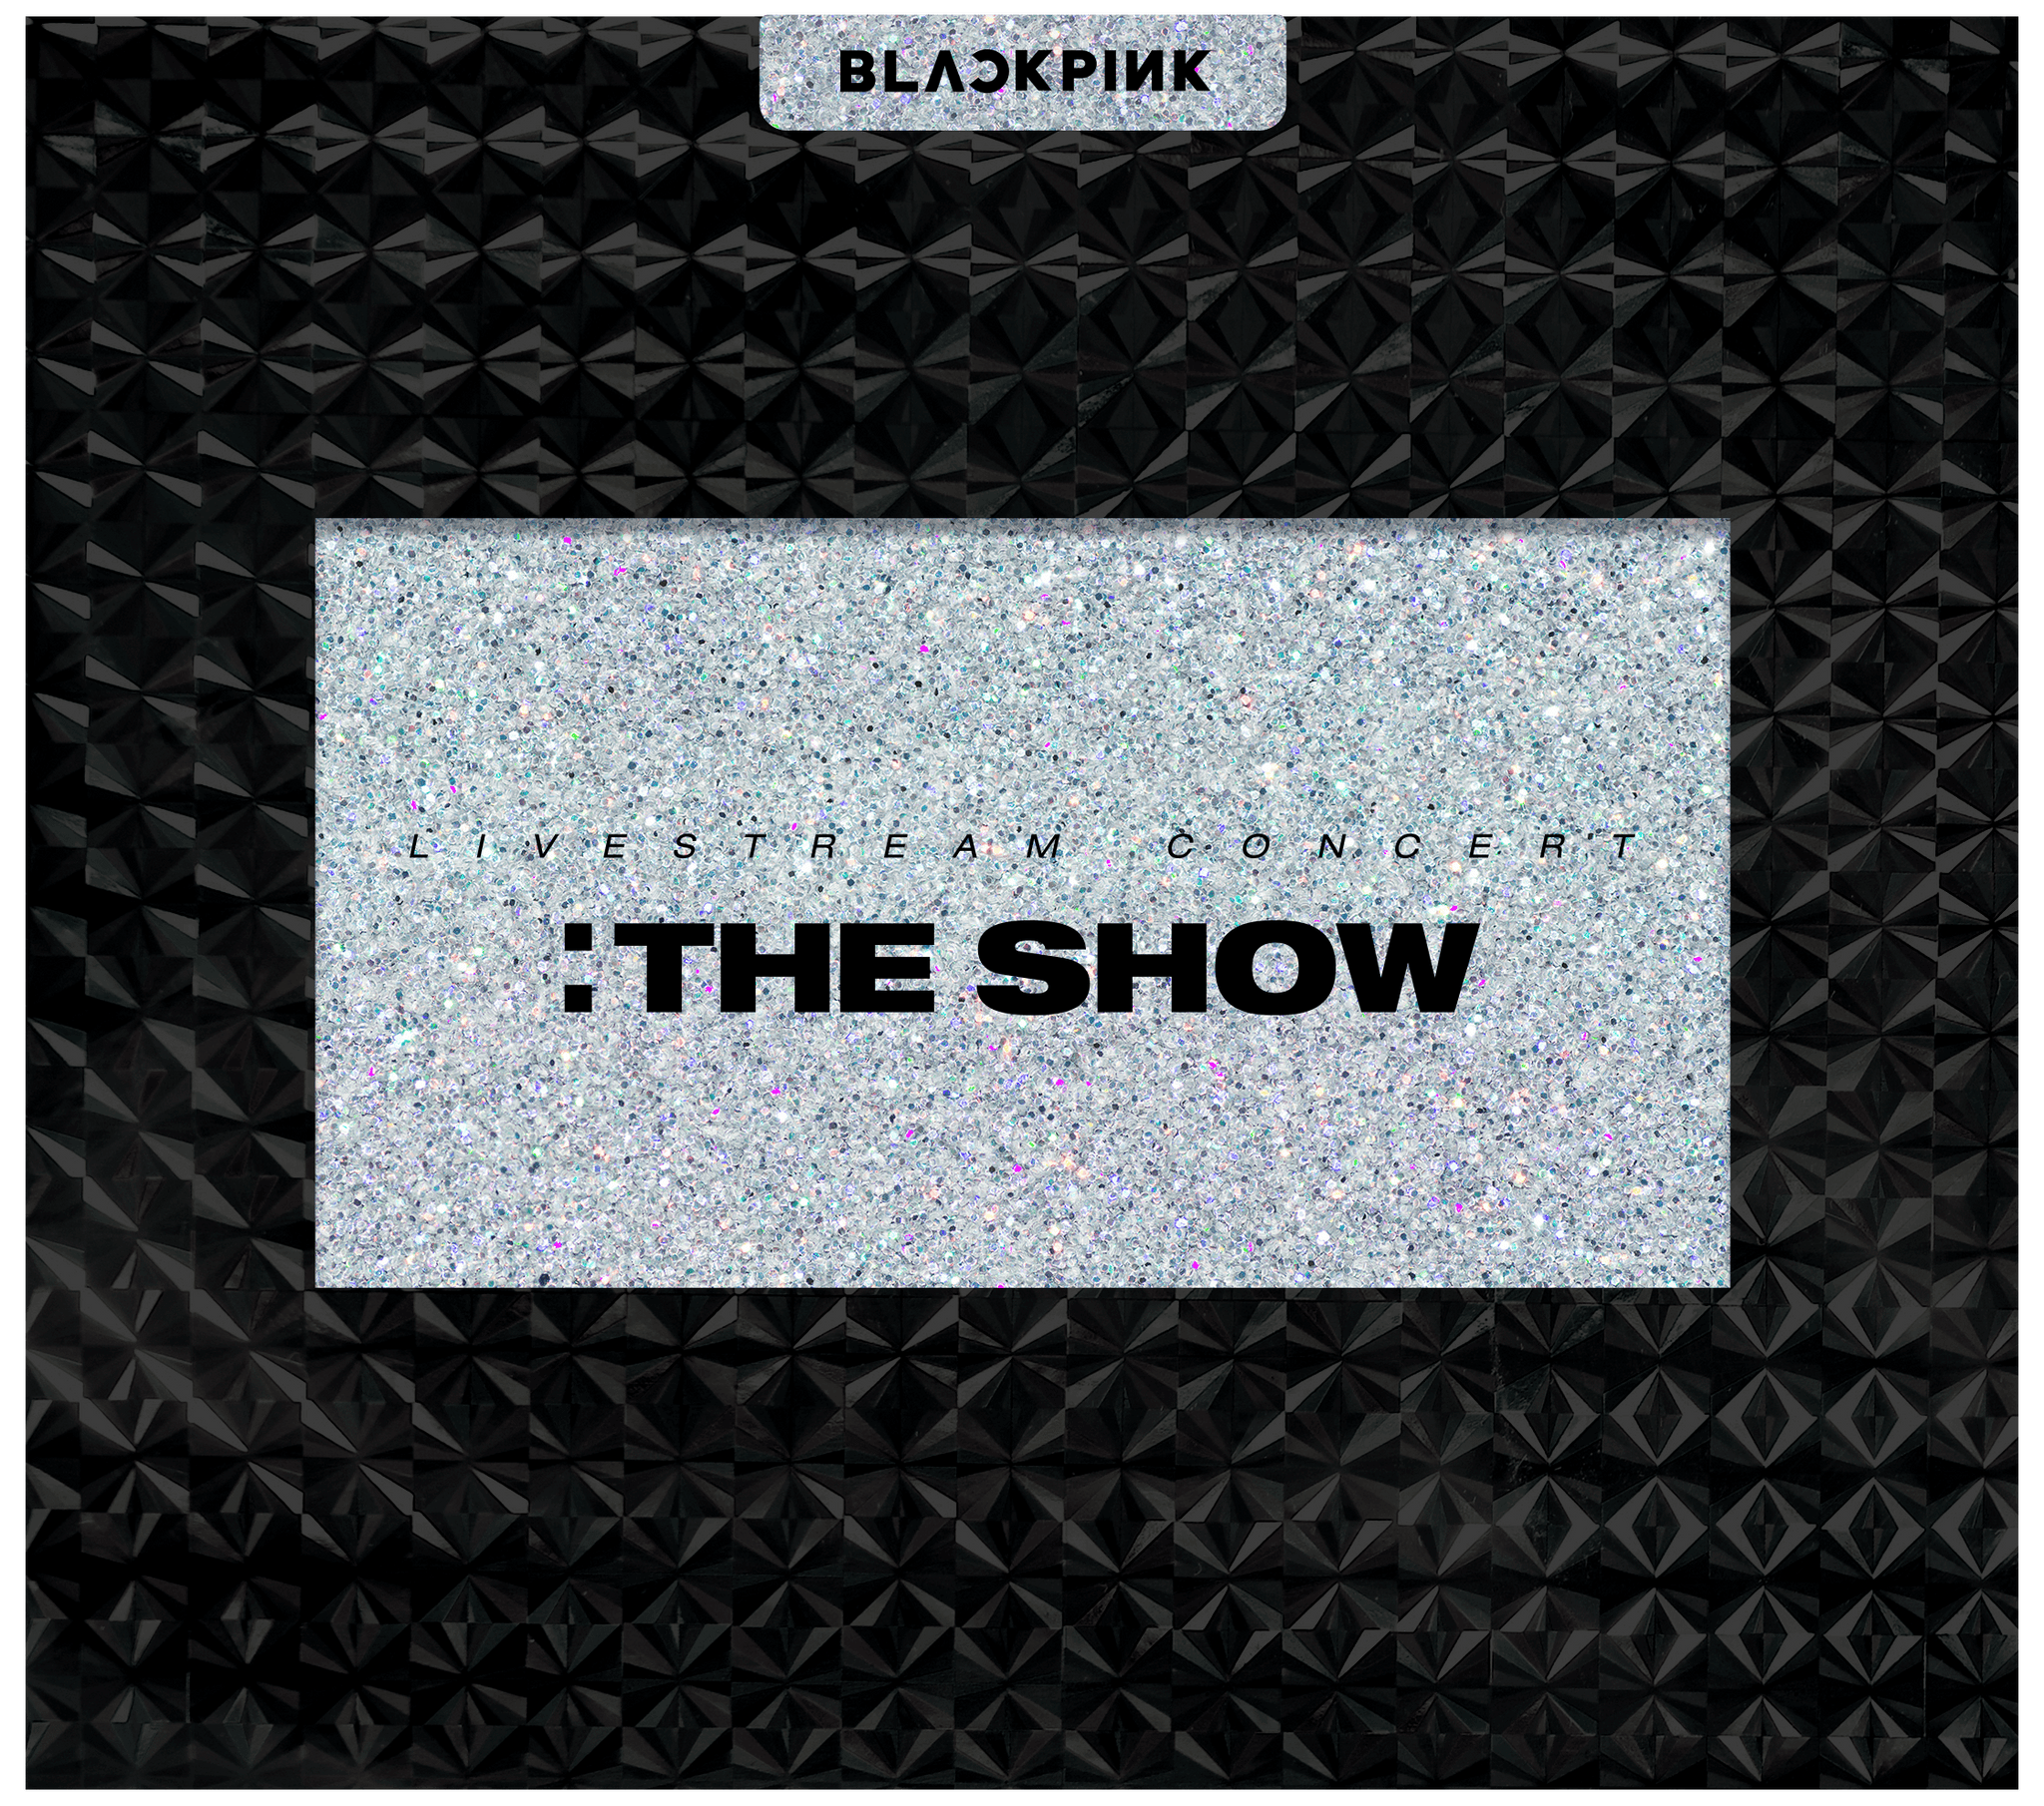 BLACKPINK LIVE ALBUM '2021 THE SHOW'